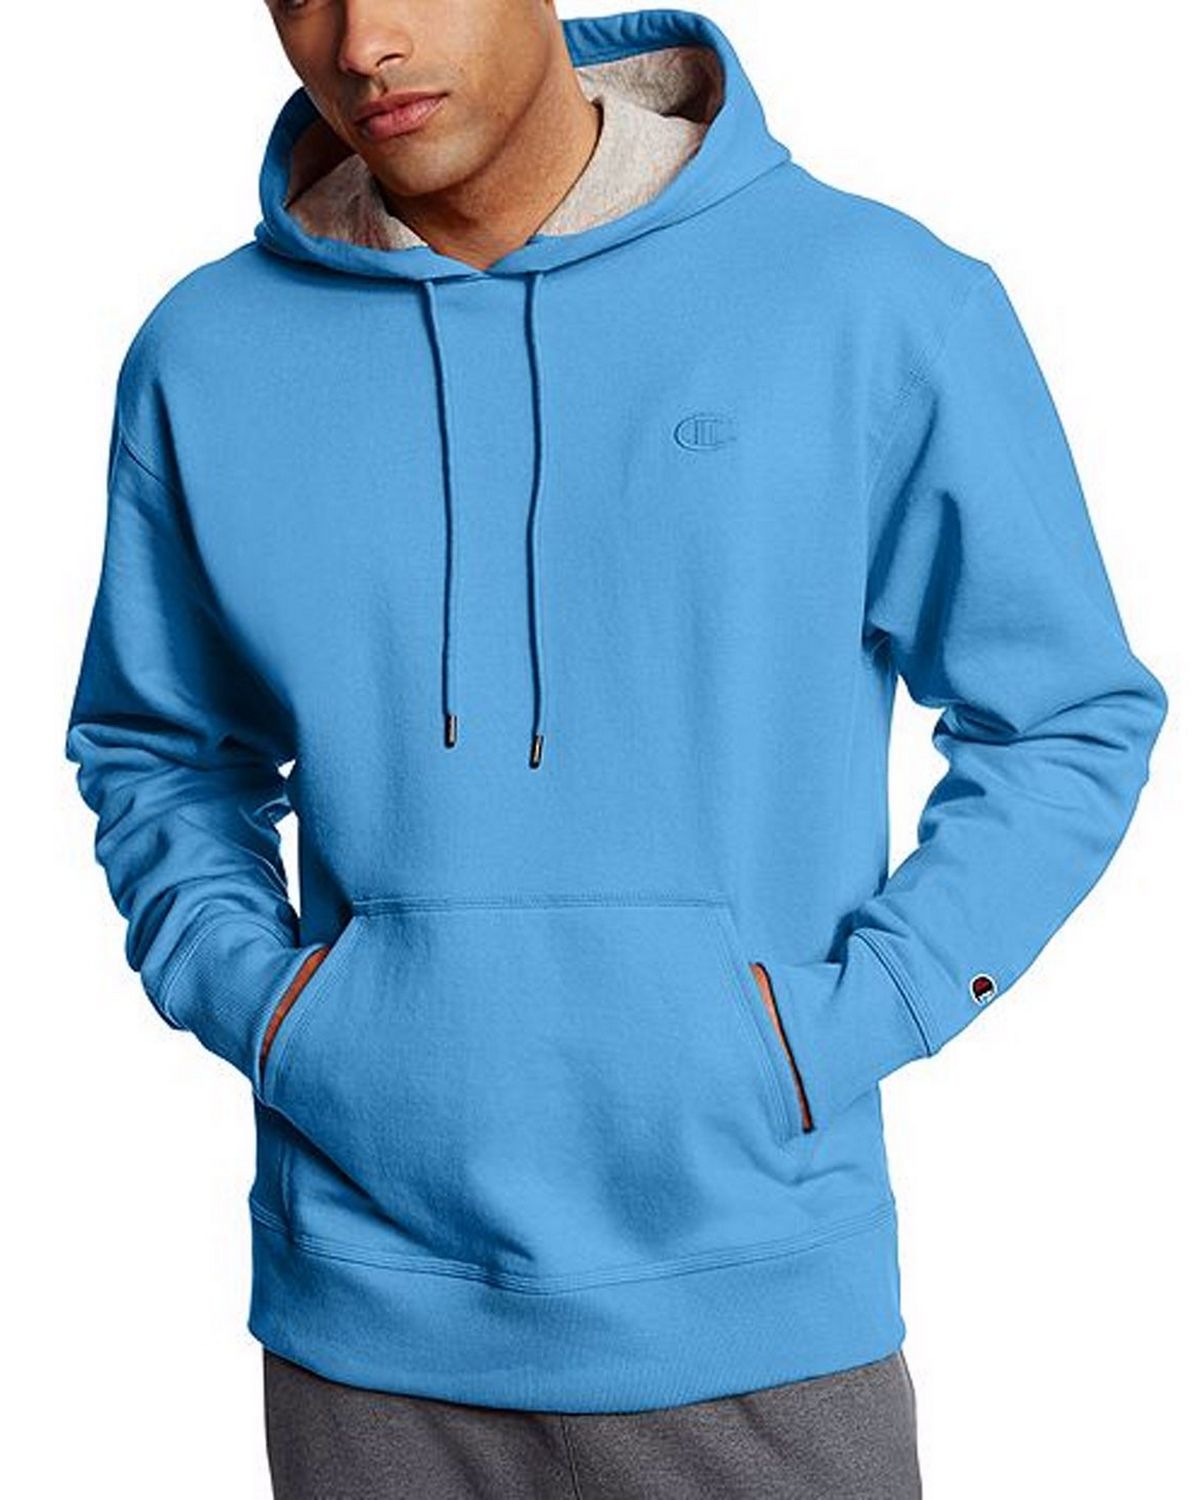 deep hotline blue champion hoodie